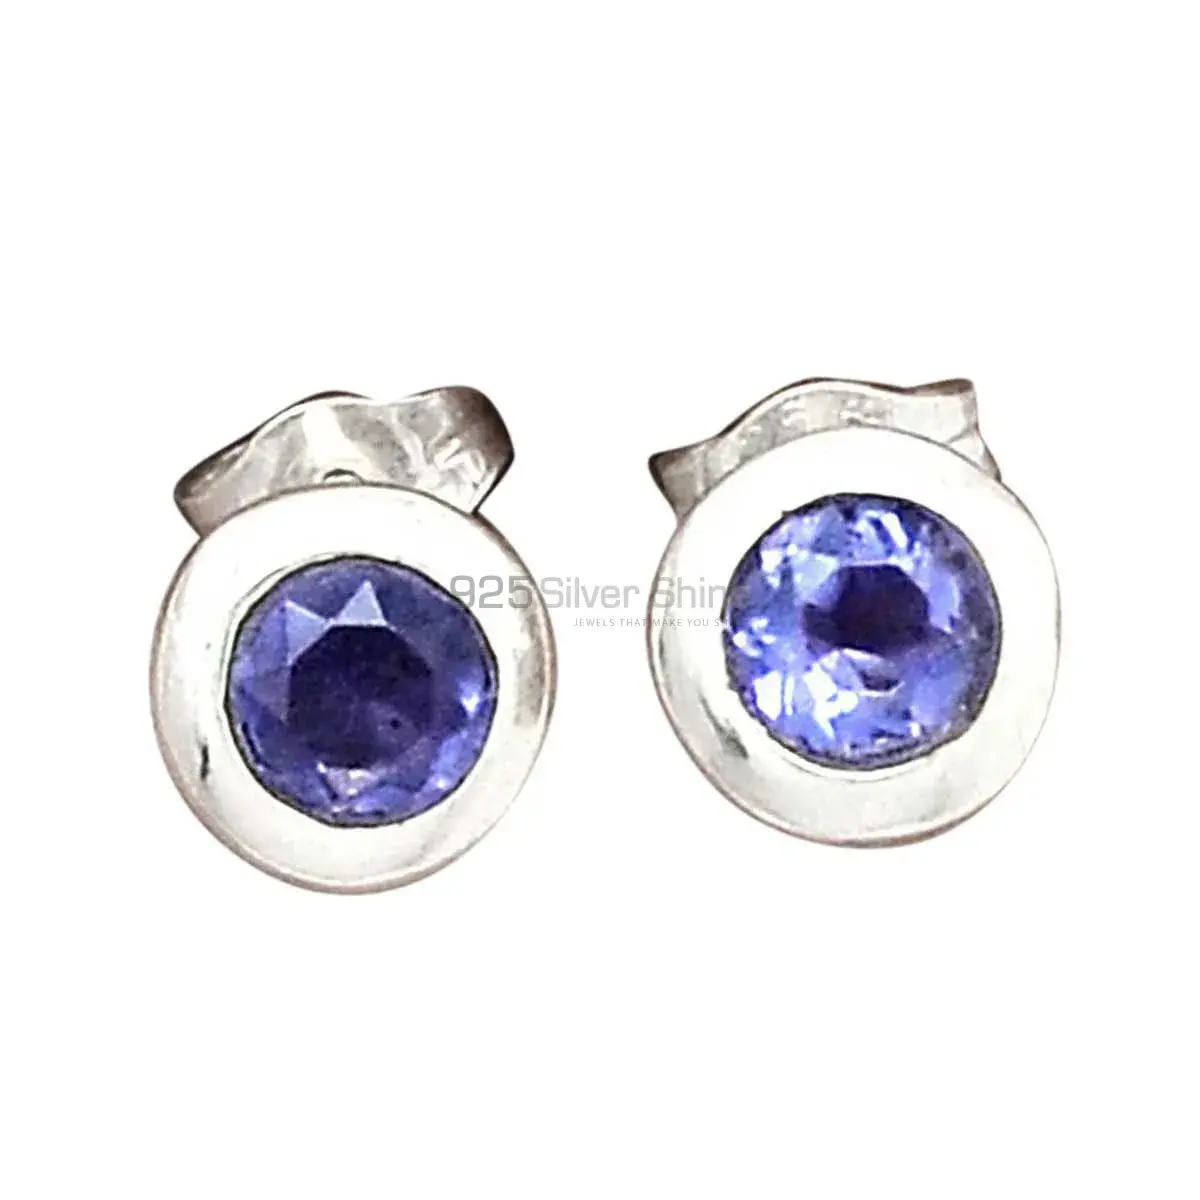 Genuine Iolite Gemstone Earrings Manufacturer In 925 Sterling Silver Jewelry 925SE2216